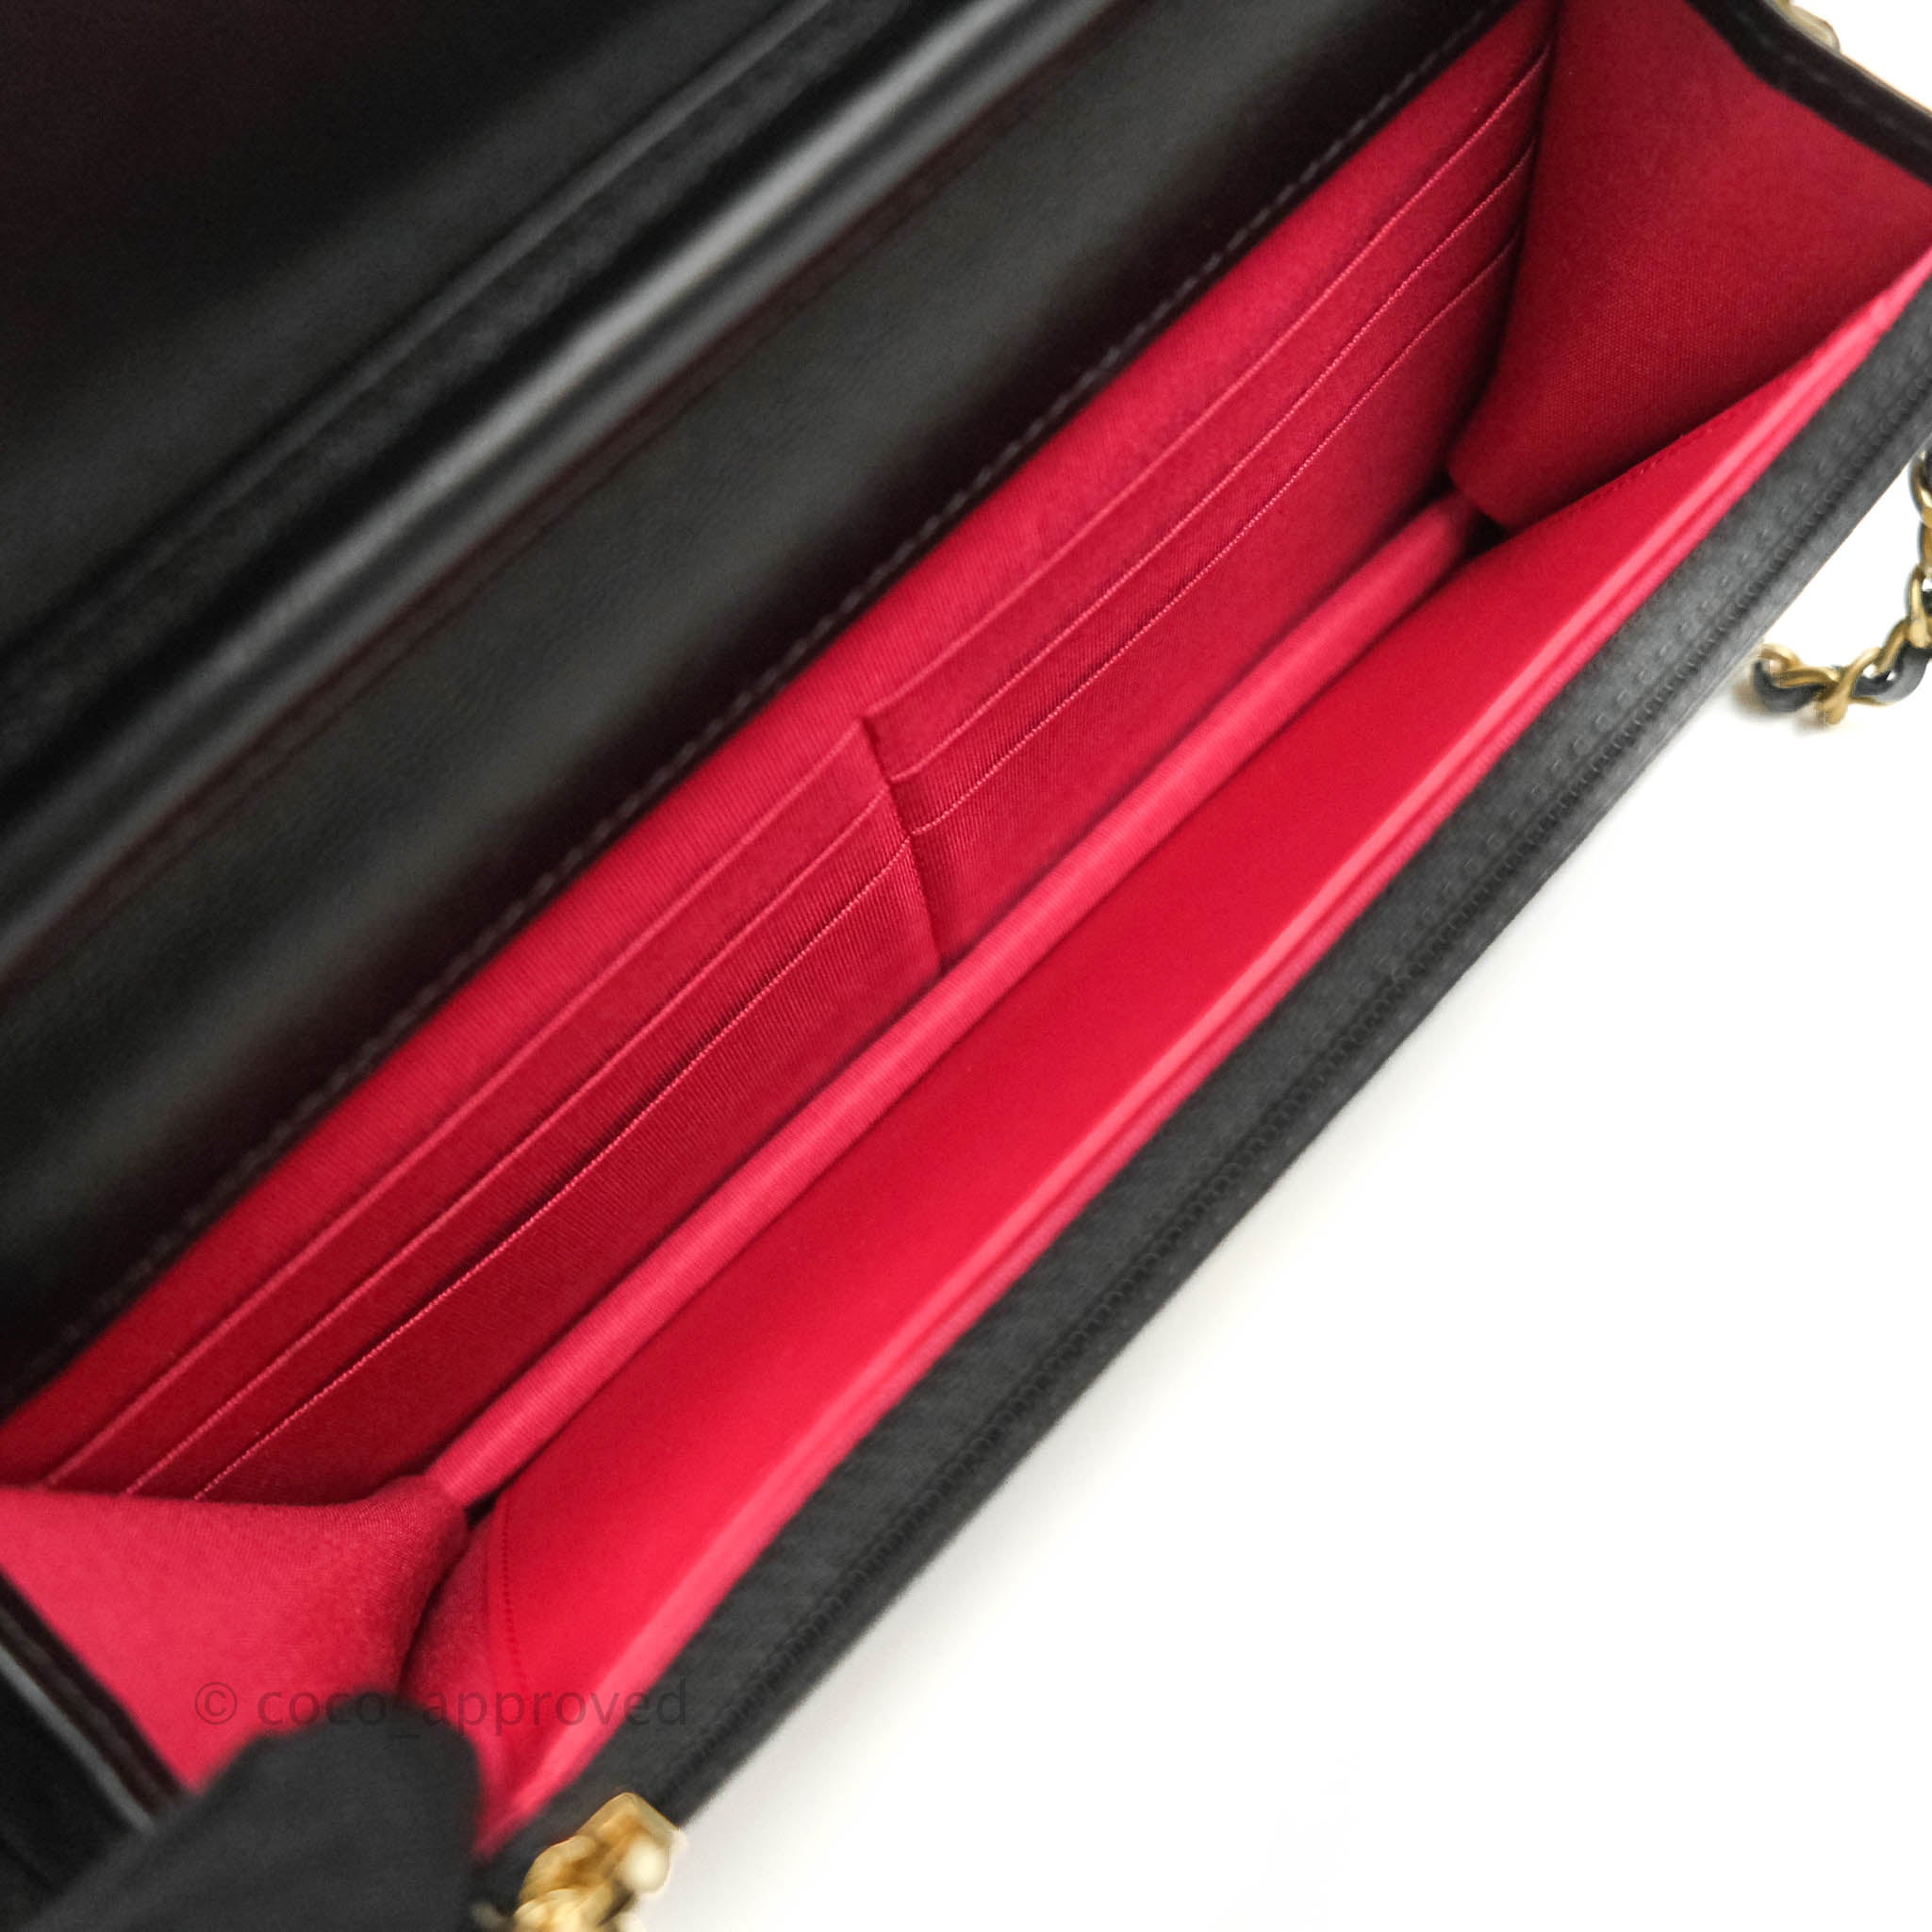 Ch Classic Quilted Wallet On Chain Black Lambskin Matt GHW Size 18.5×12×3.5  cm Chain drop 60 cm Nov 2018 RM5500 Disclaimer : Luxury…